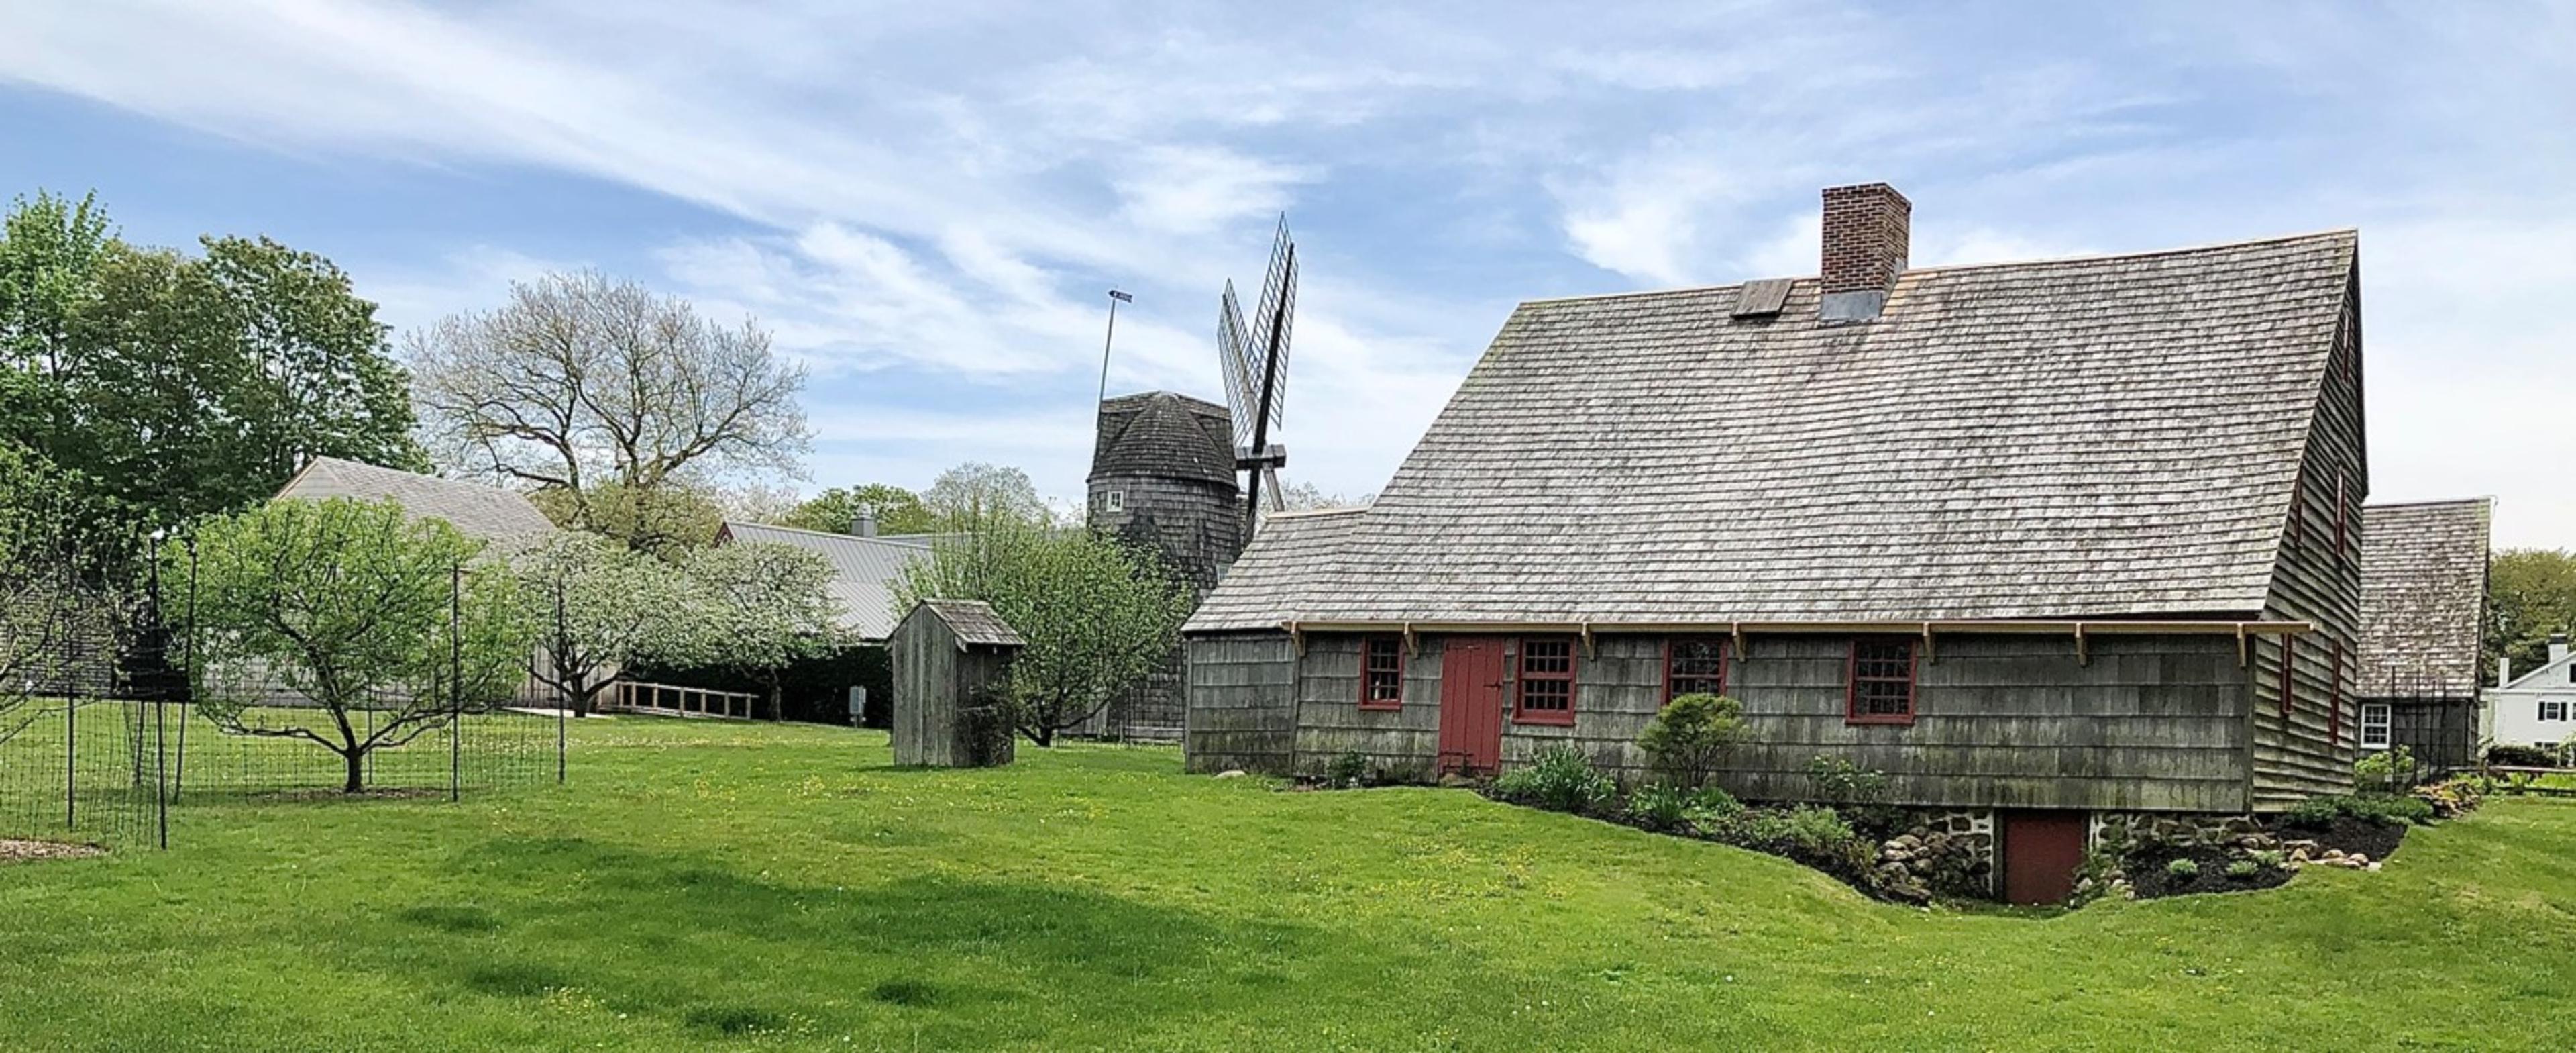 East Hampton Historical Society: Mulford Farm Museum